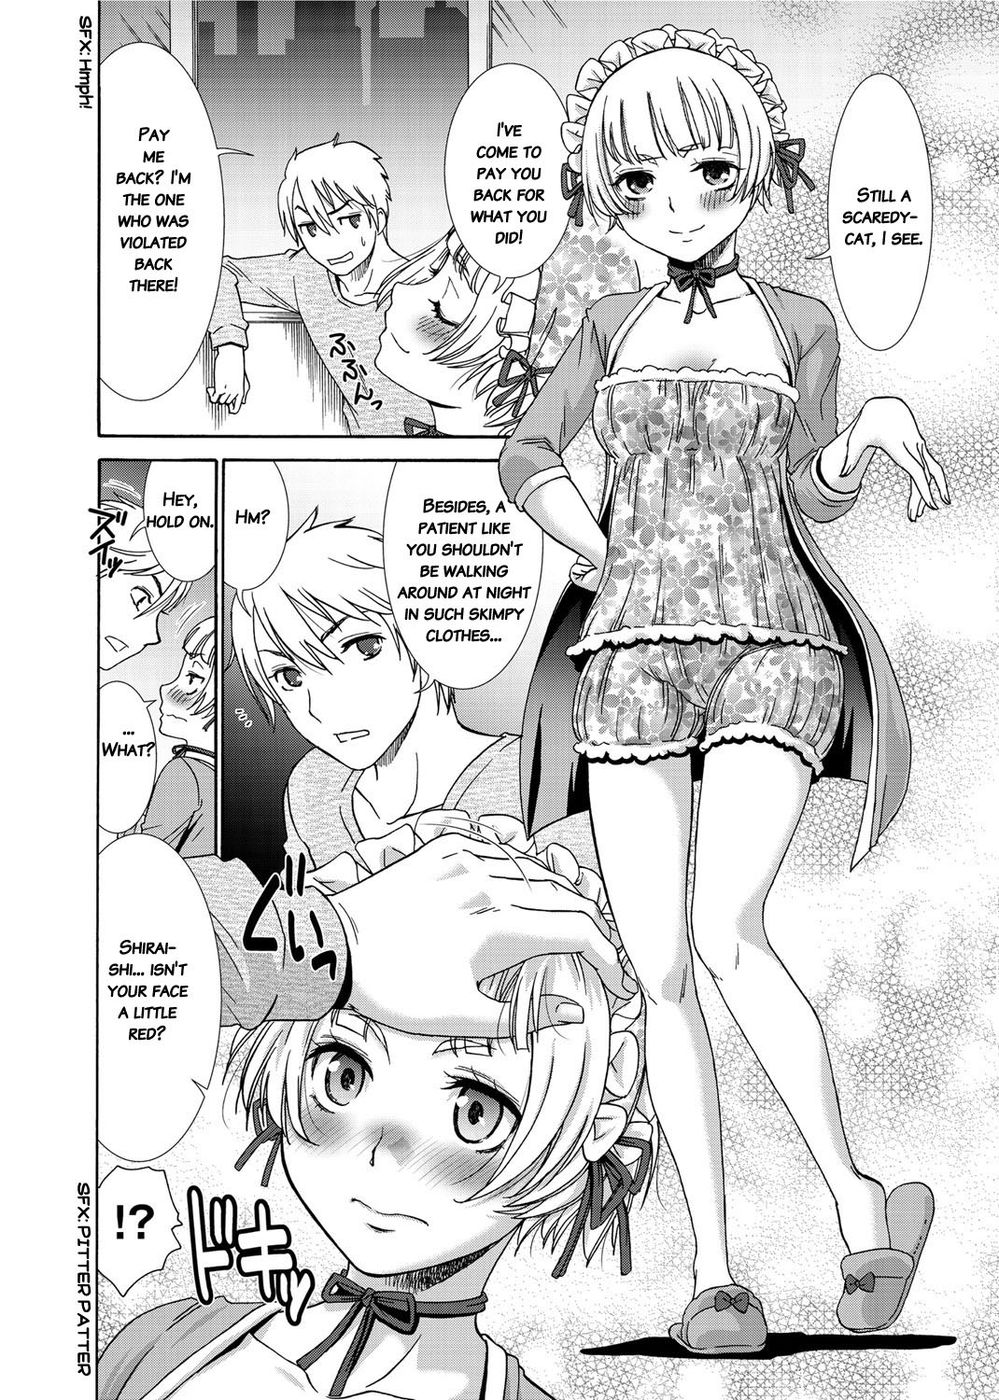 Hentai Manga Comic-Momoiro Nurse-Chapter 8 - Aviolating decision!-2